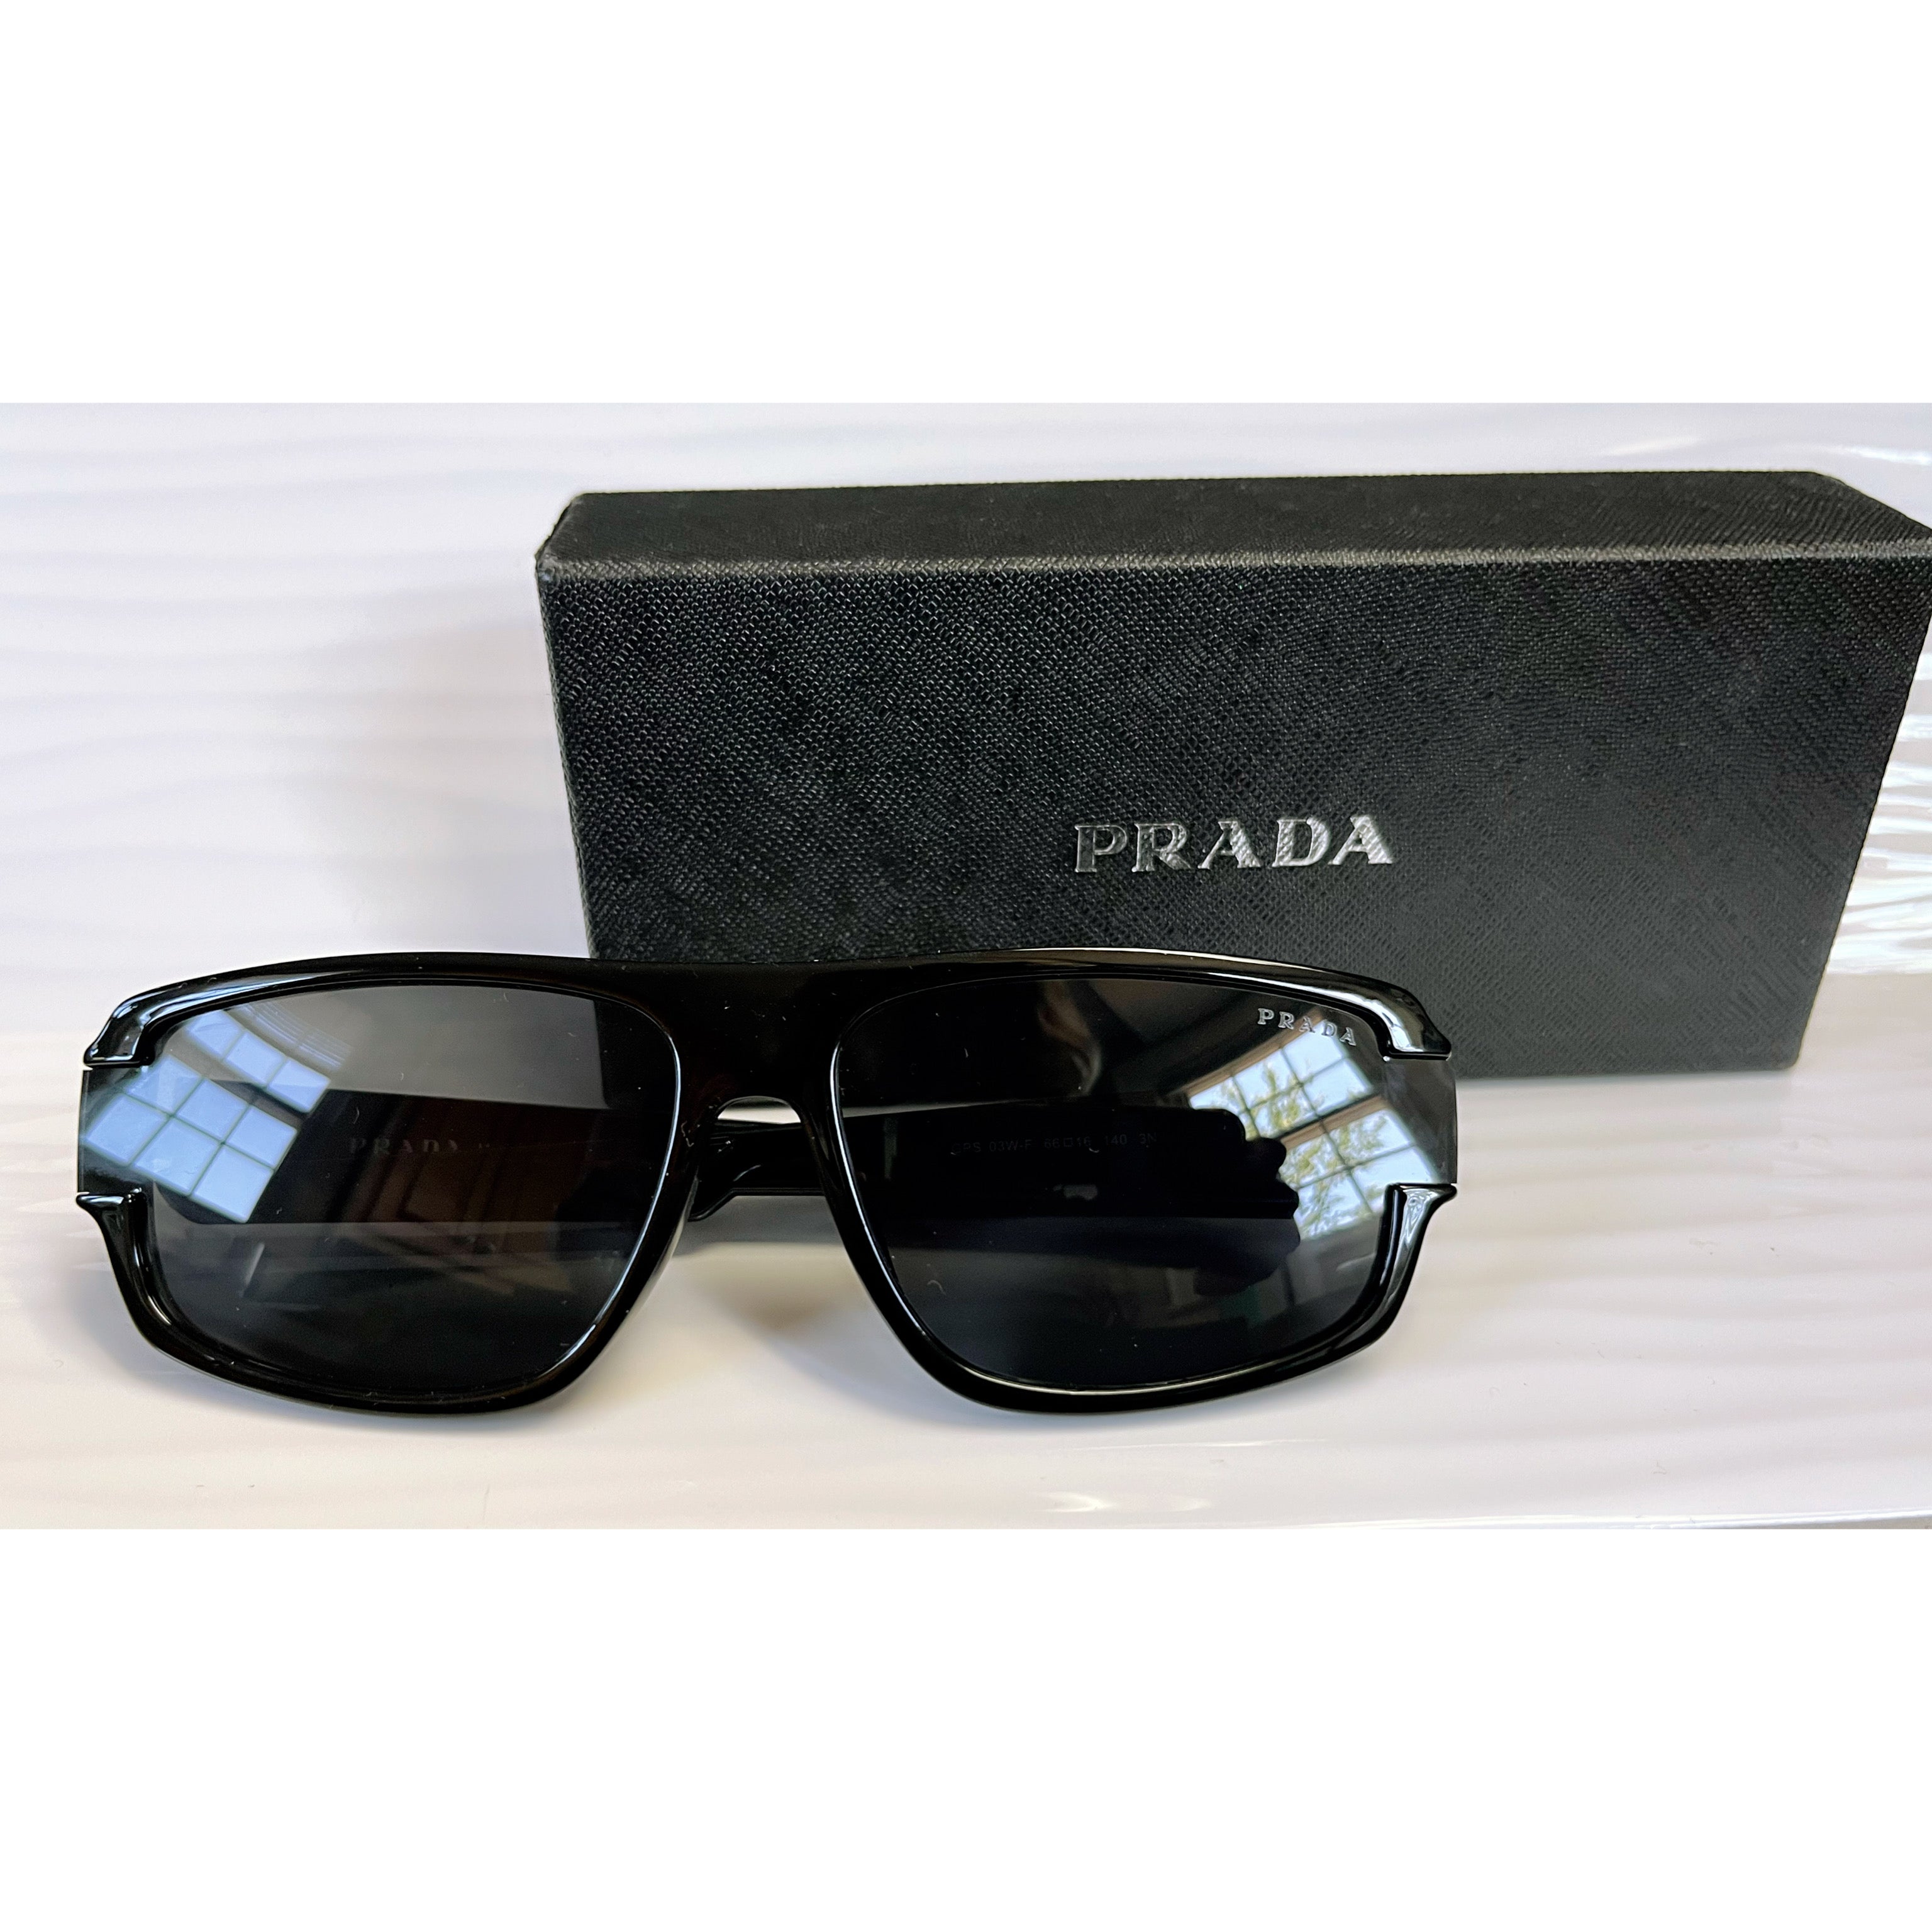 Prada Linea Rossa sunglasses, NEW without tags.